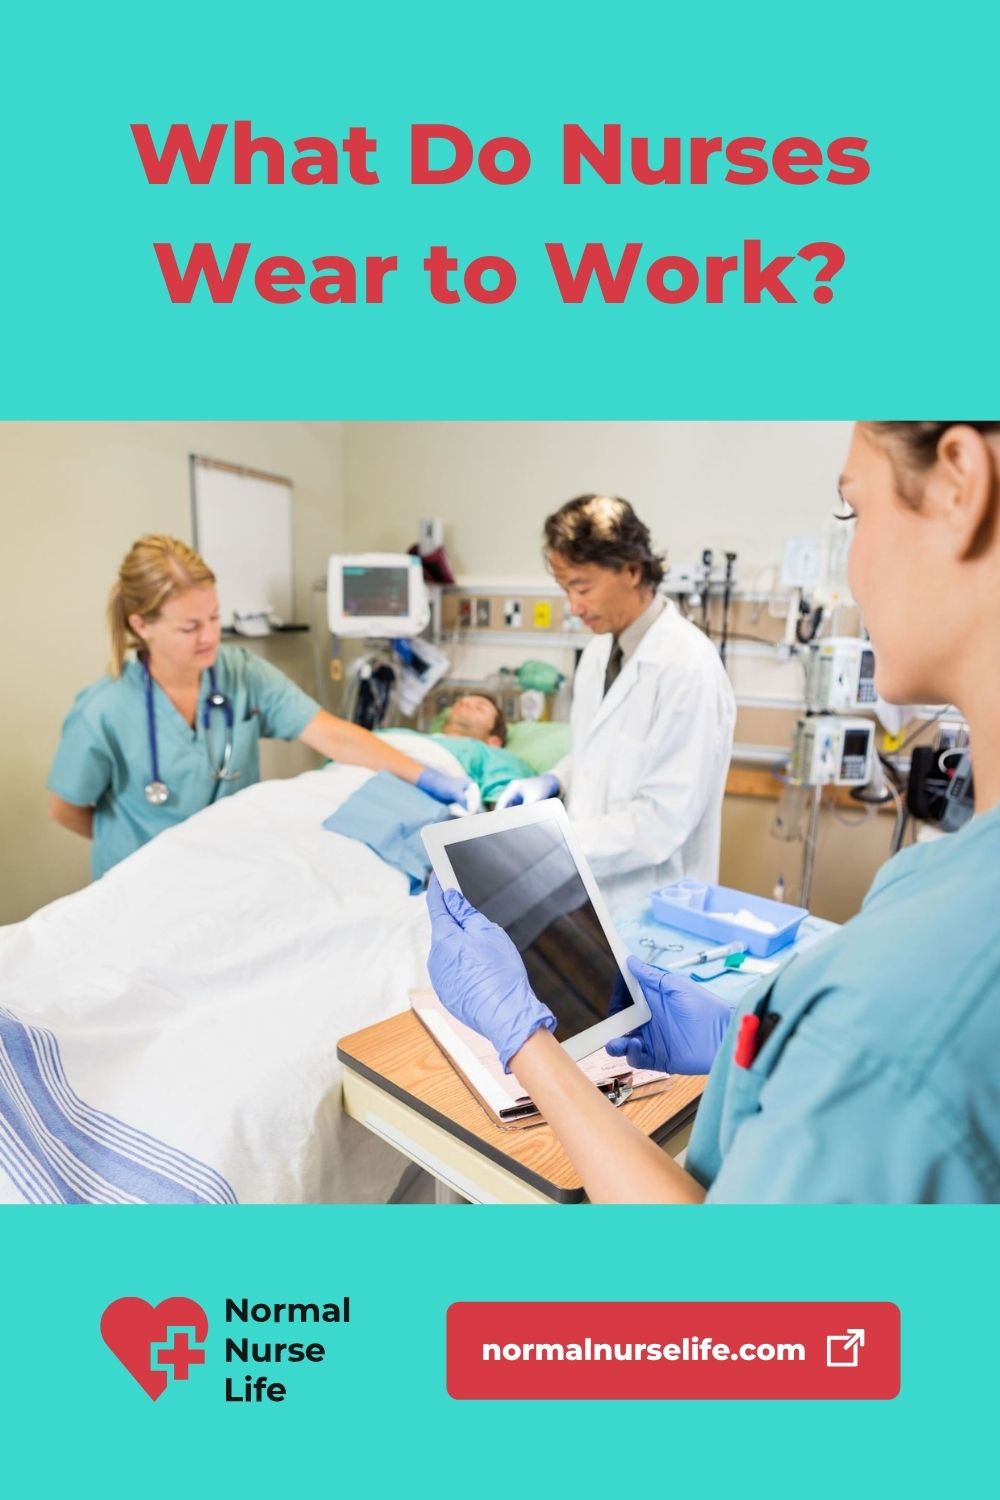 What do nurses wear to work